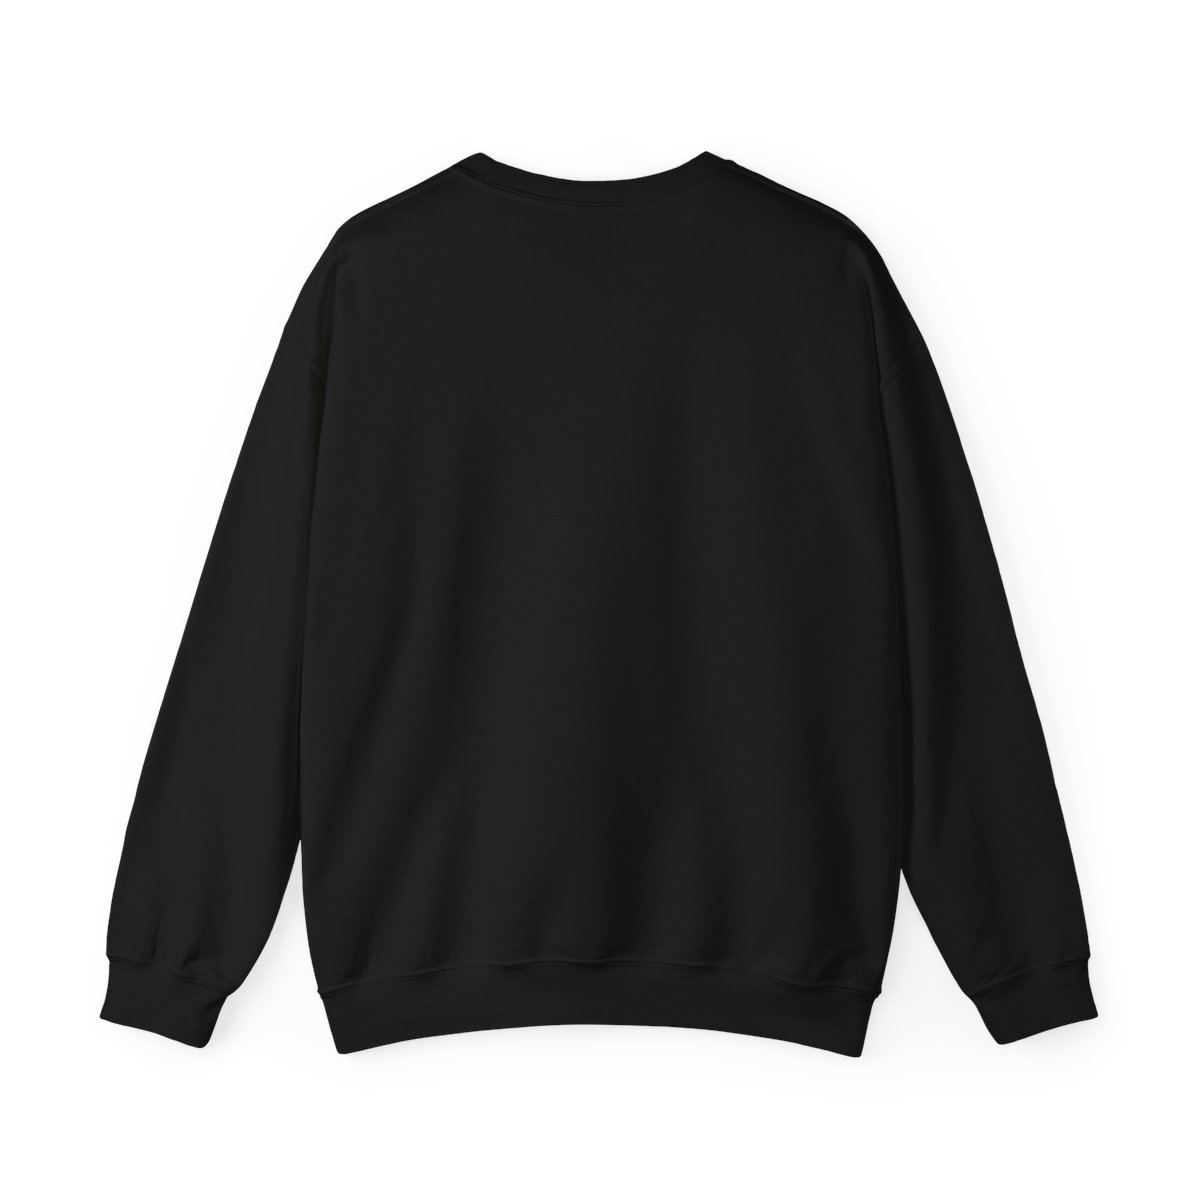 Doug Shea Unisex Heavy Blend™ Crewneck Sweatshirt product thumbnail image